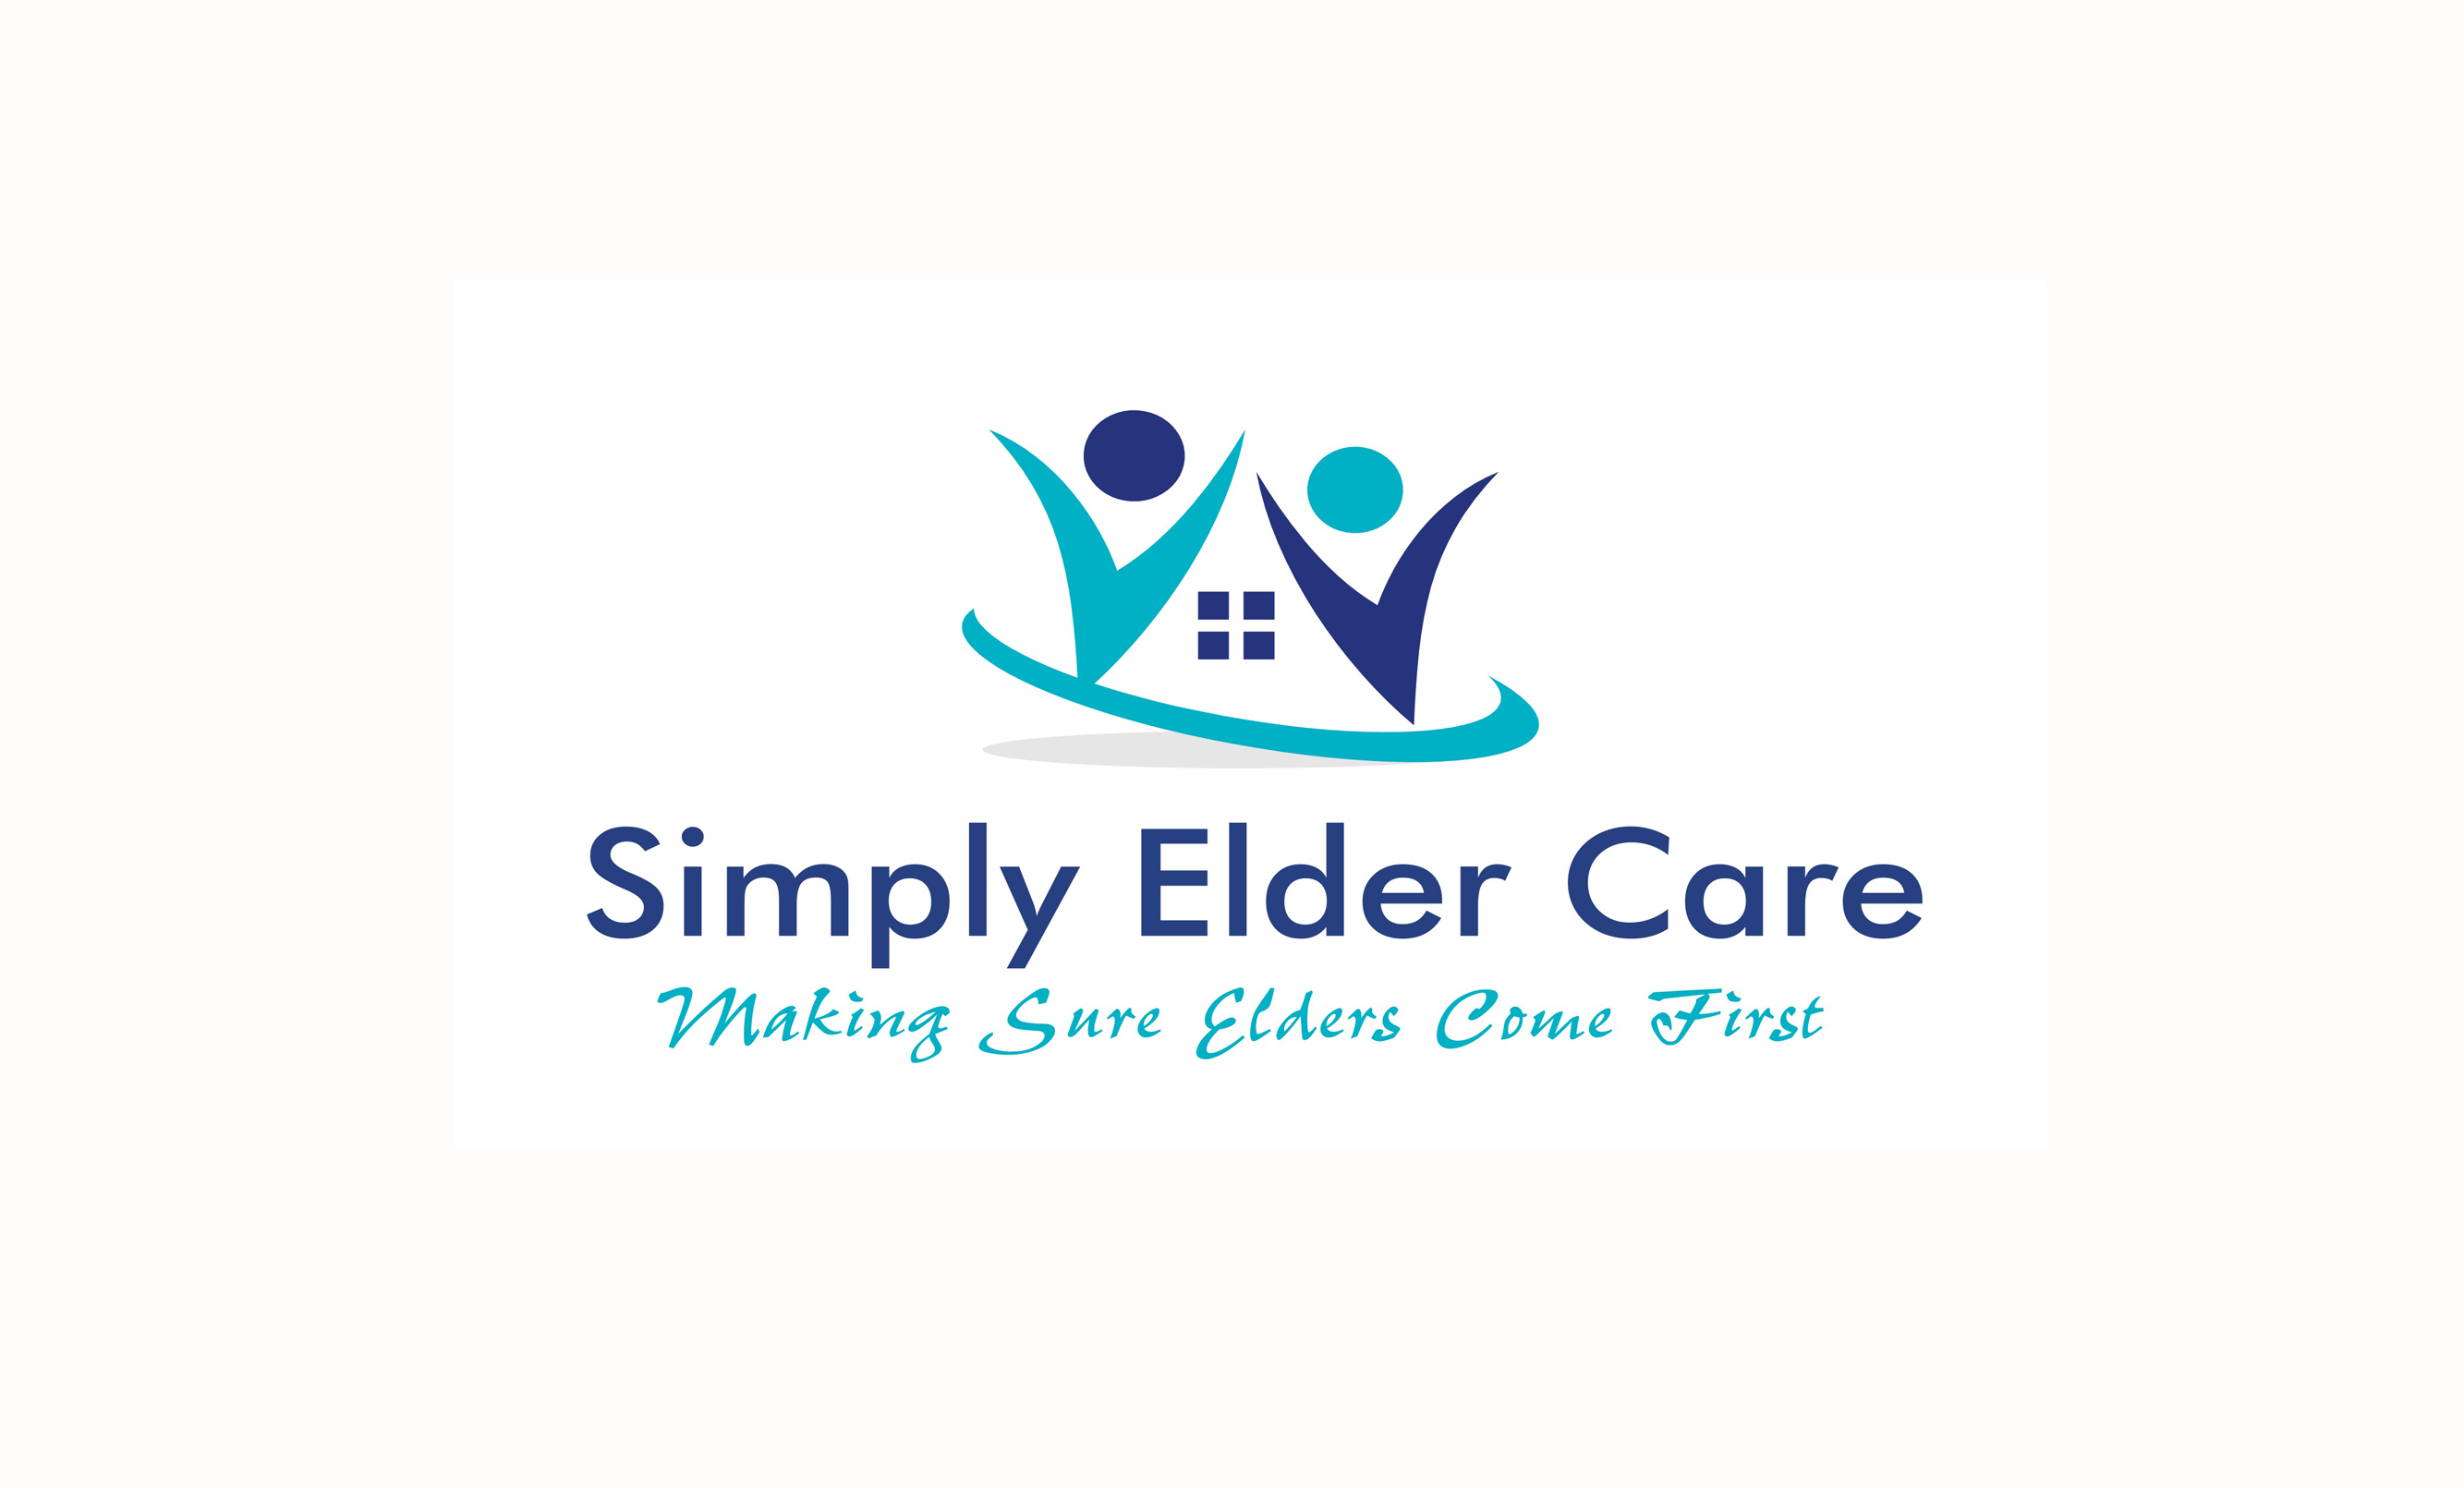 Simply Elder Care image